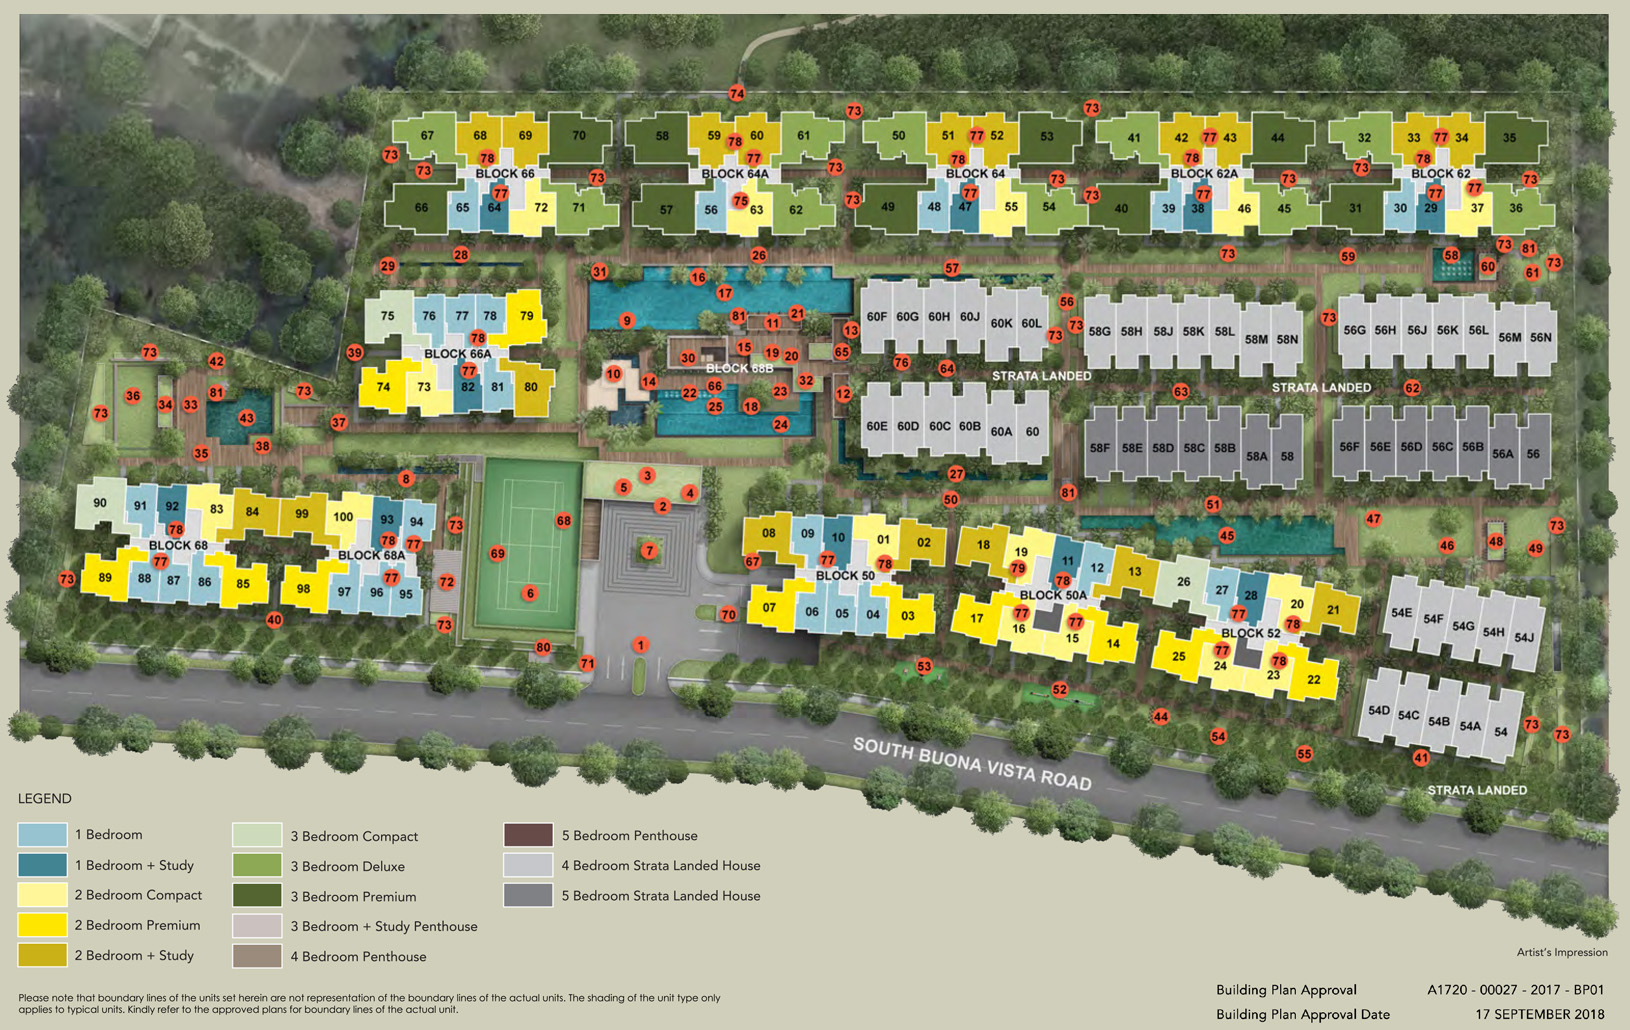 Kent Ridge Hill Residences Site Plan